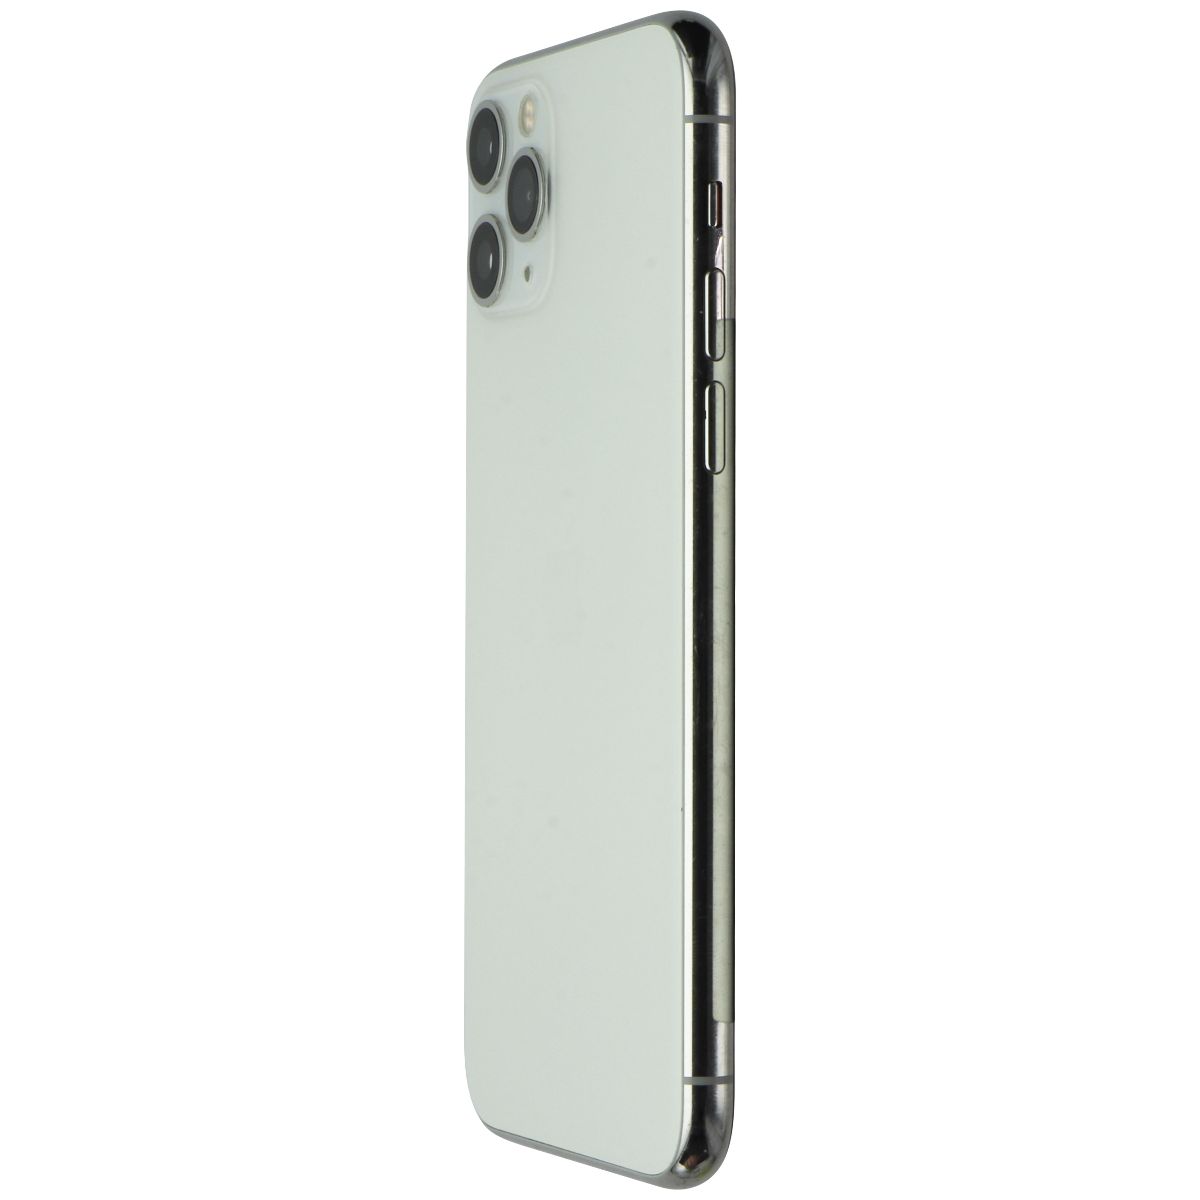 Apple iPhone 11 Pro (5.8-inch) Smartphone A2160 (Unlocked) - 256GB / Silver Cell Phones & Smartphones Apple    - Simple Cell Bulk Wholesale Pricing - USA Seller